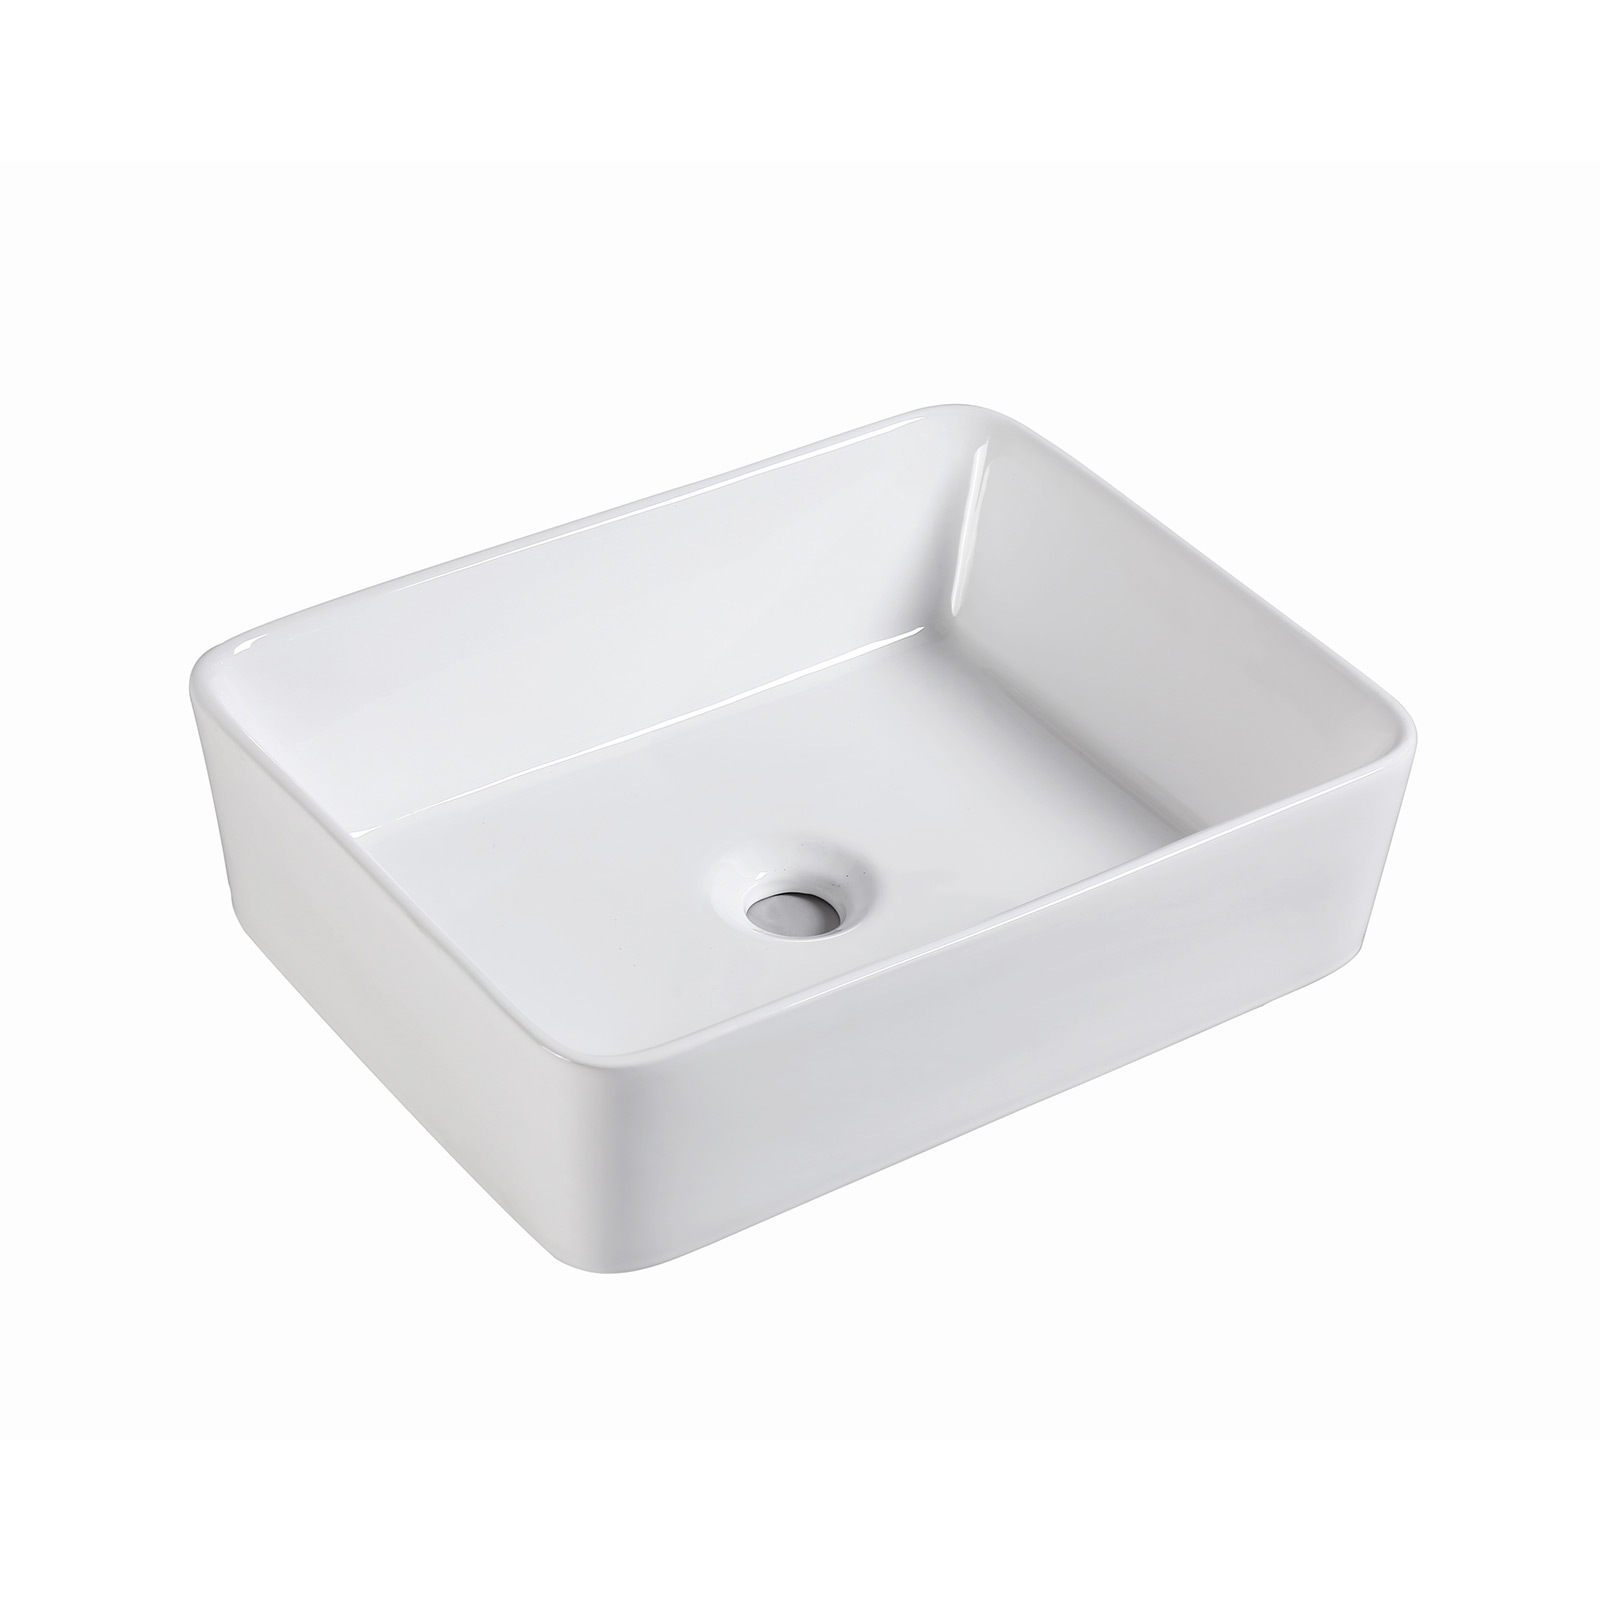 48 x 37.5 x 13cm Ceramic Bathroom Basin Rectangular - WHITE